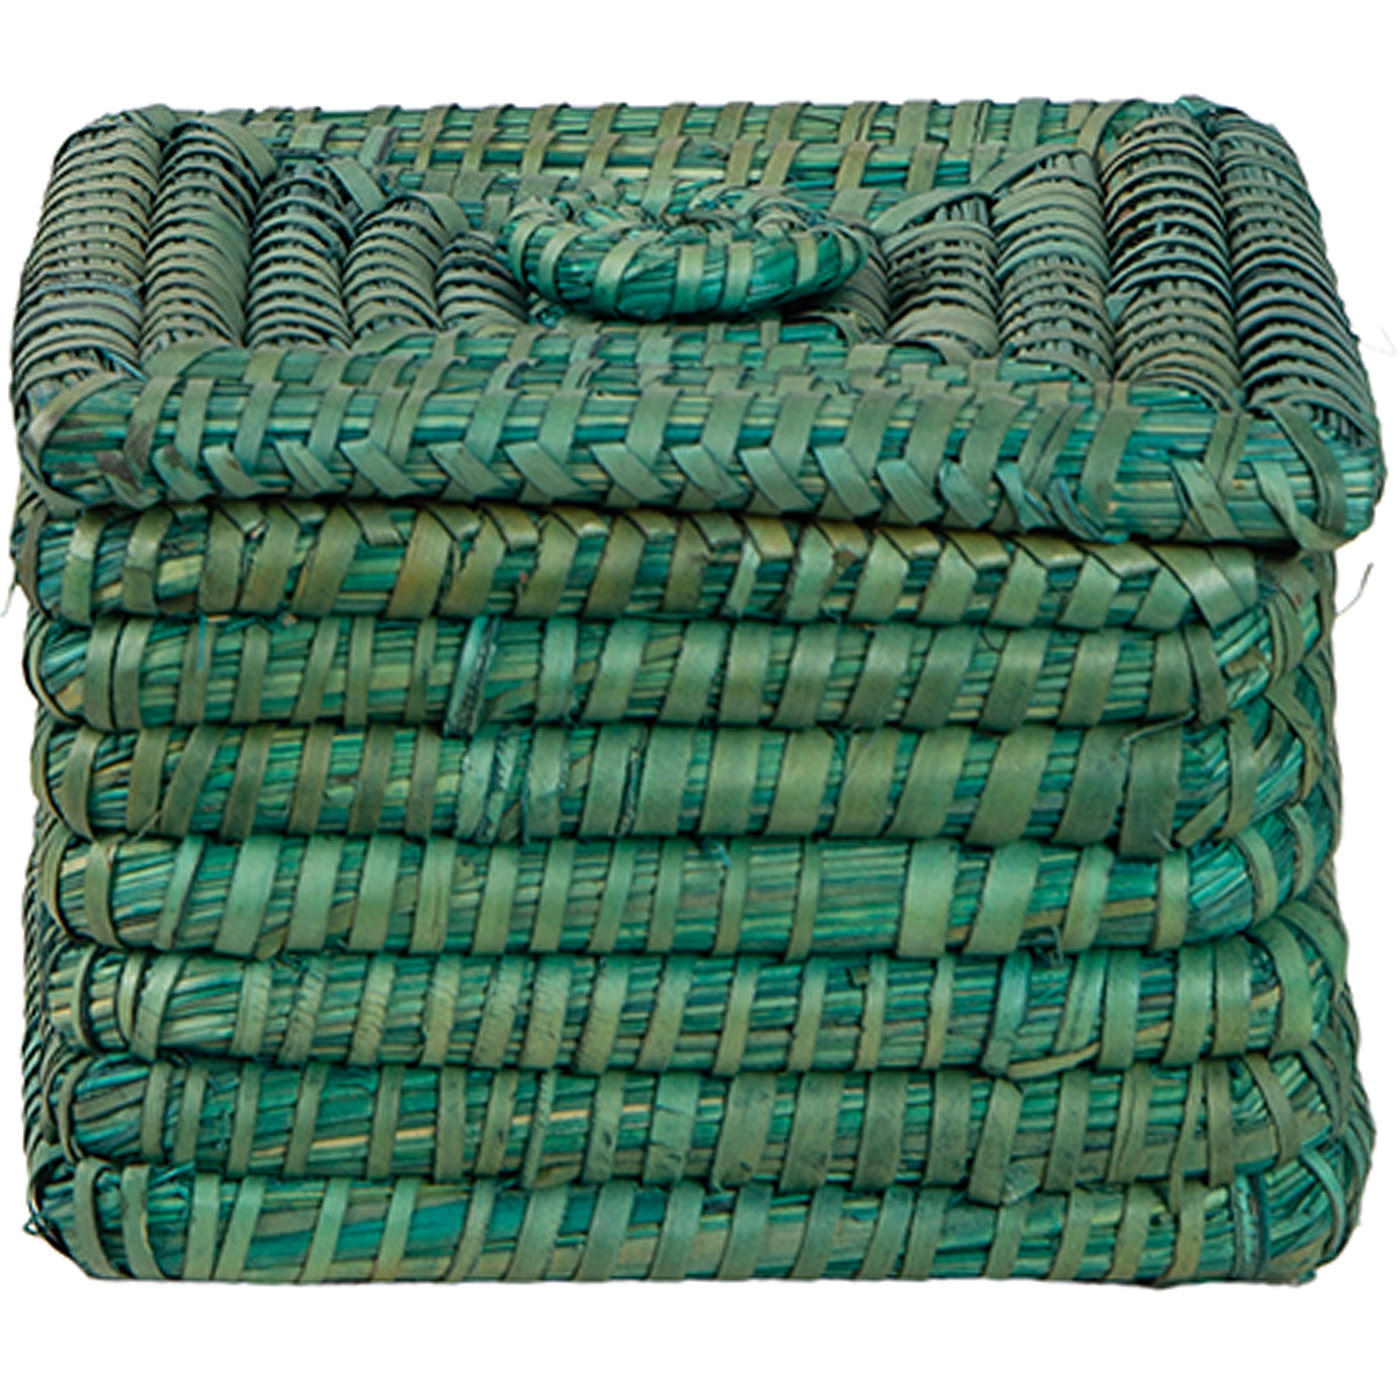 5Q 1099 062 3 – Sea Grass Square Box Turquoise S (1)